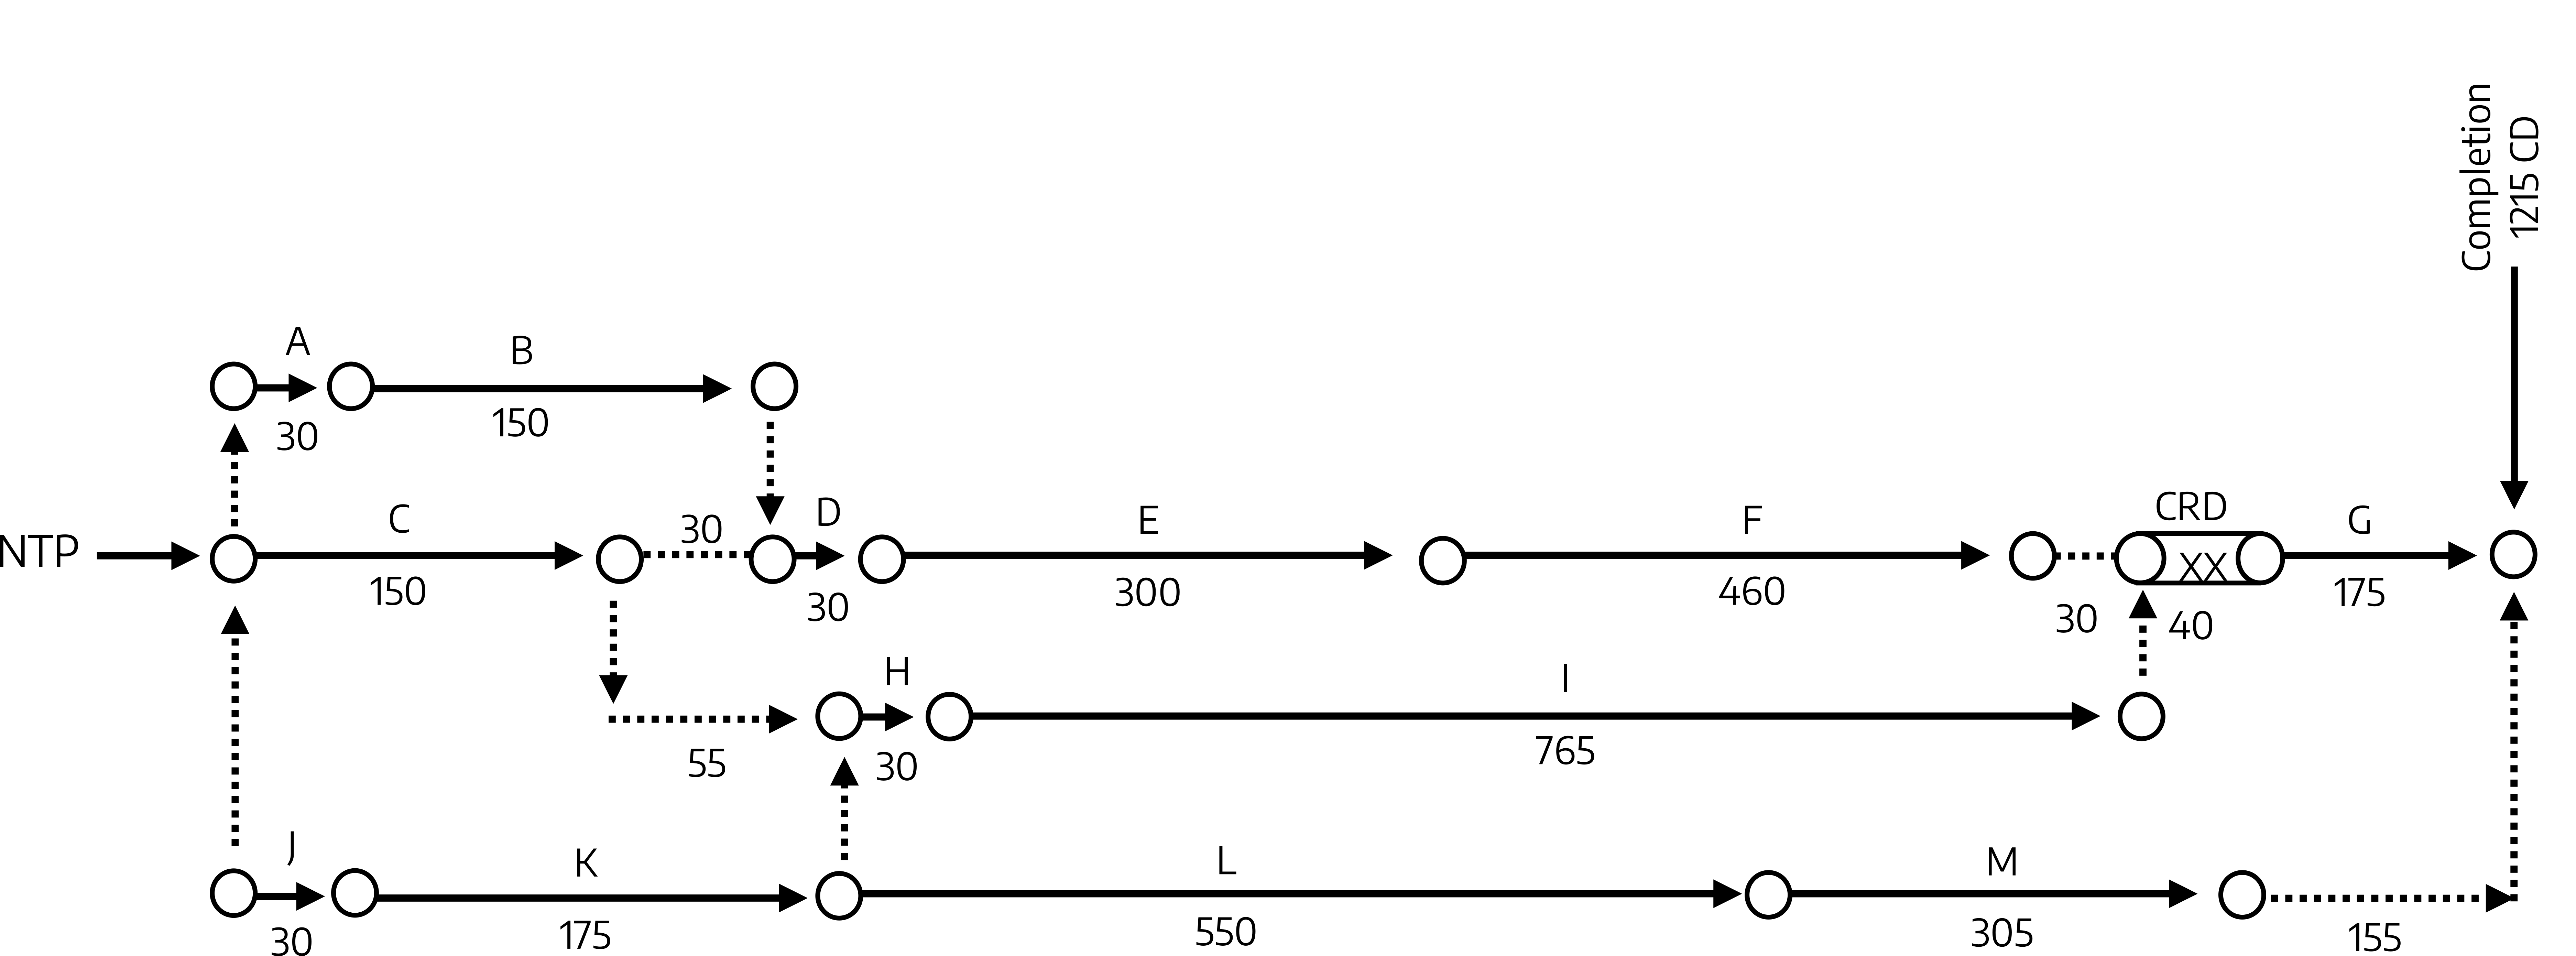 Linear timeline. Main line: NTP arrow C (150) arrow 30 arrow D (30) arrow E (300) arrow F (460) arrow 30, CRD (40), G (175) arrow completion (1215 CD). Short line above main line: A (30) arrow B (150) arrow down to D to connect to main line. Short line below main line: arrow down from 30 on the main line to 55 arrow H (30) arrow I (765) arrow up to connect to CRD on the main line. Long line at the very bottom: J (30) arrow K (175) arrow L (550) arrow M (305) arrow 155 arrow completion (1215 CD).